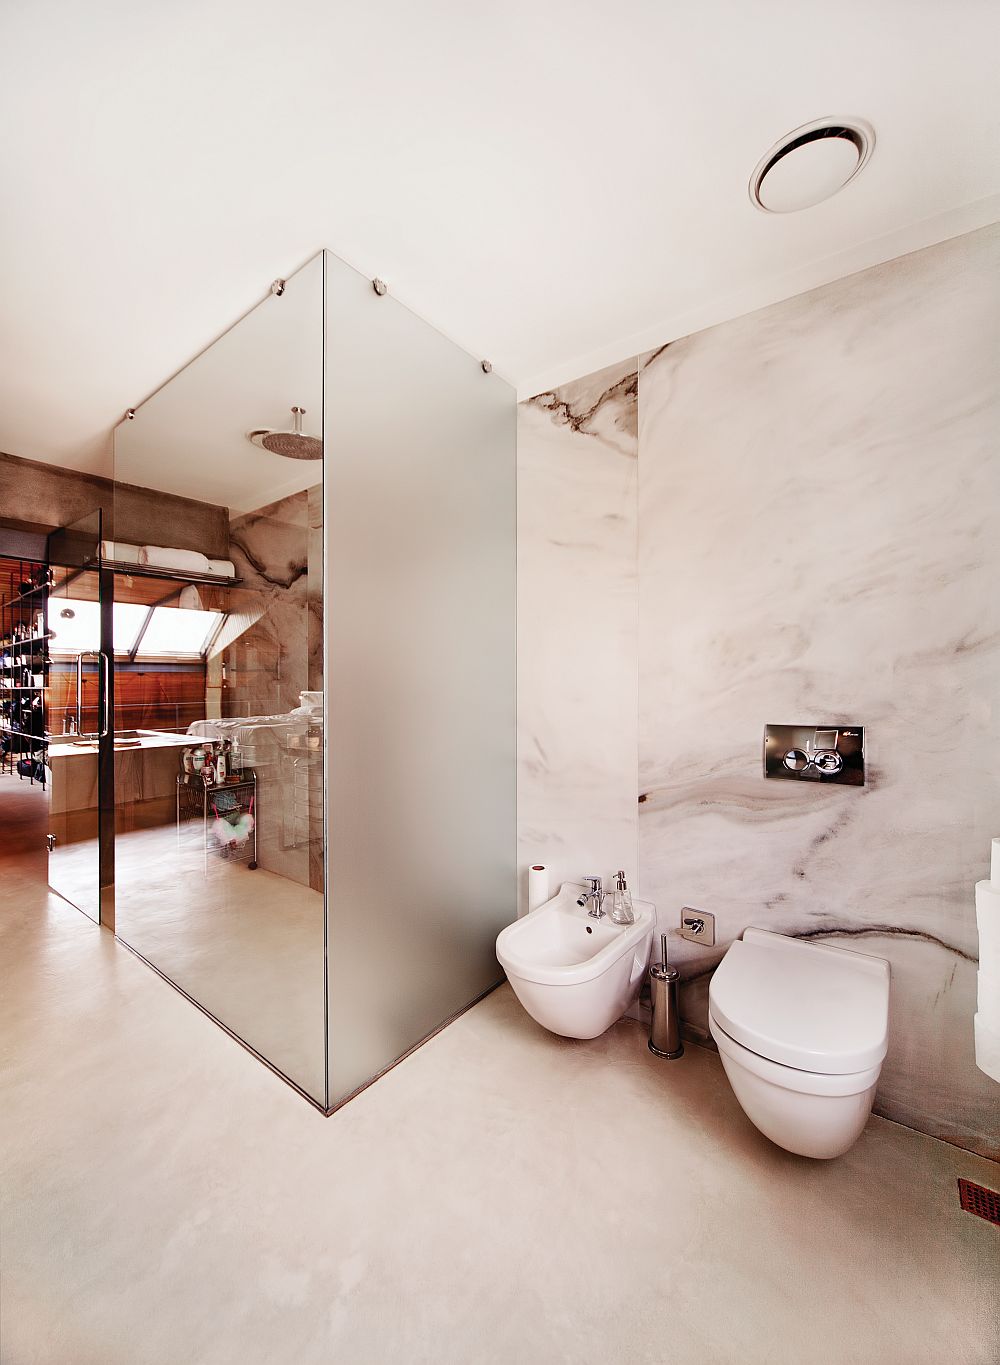 Modern bathroom with a glass shower area